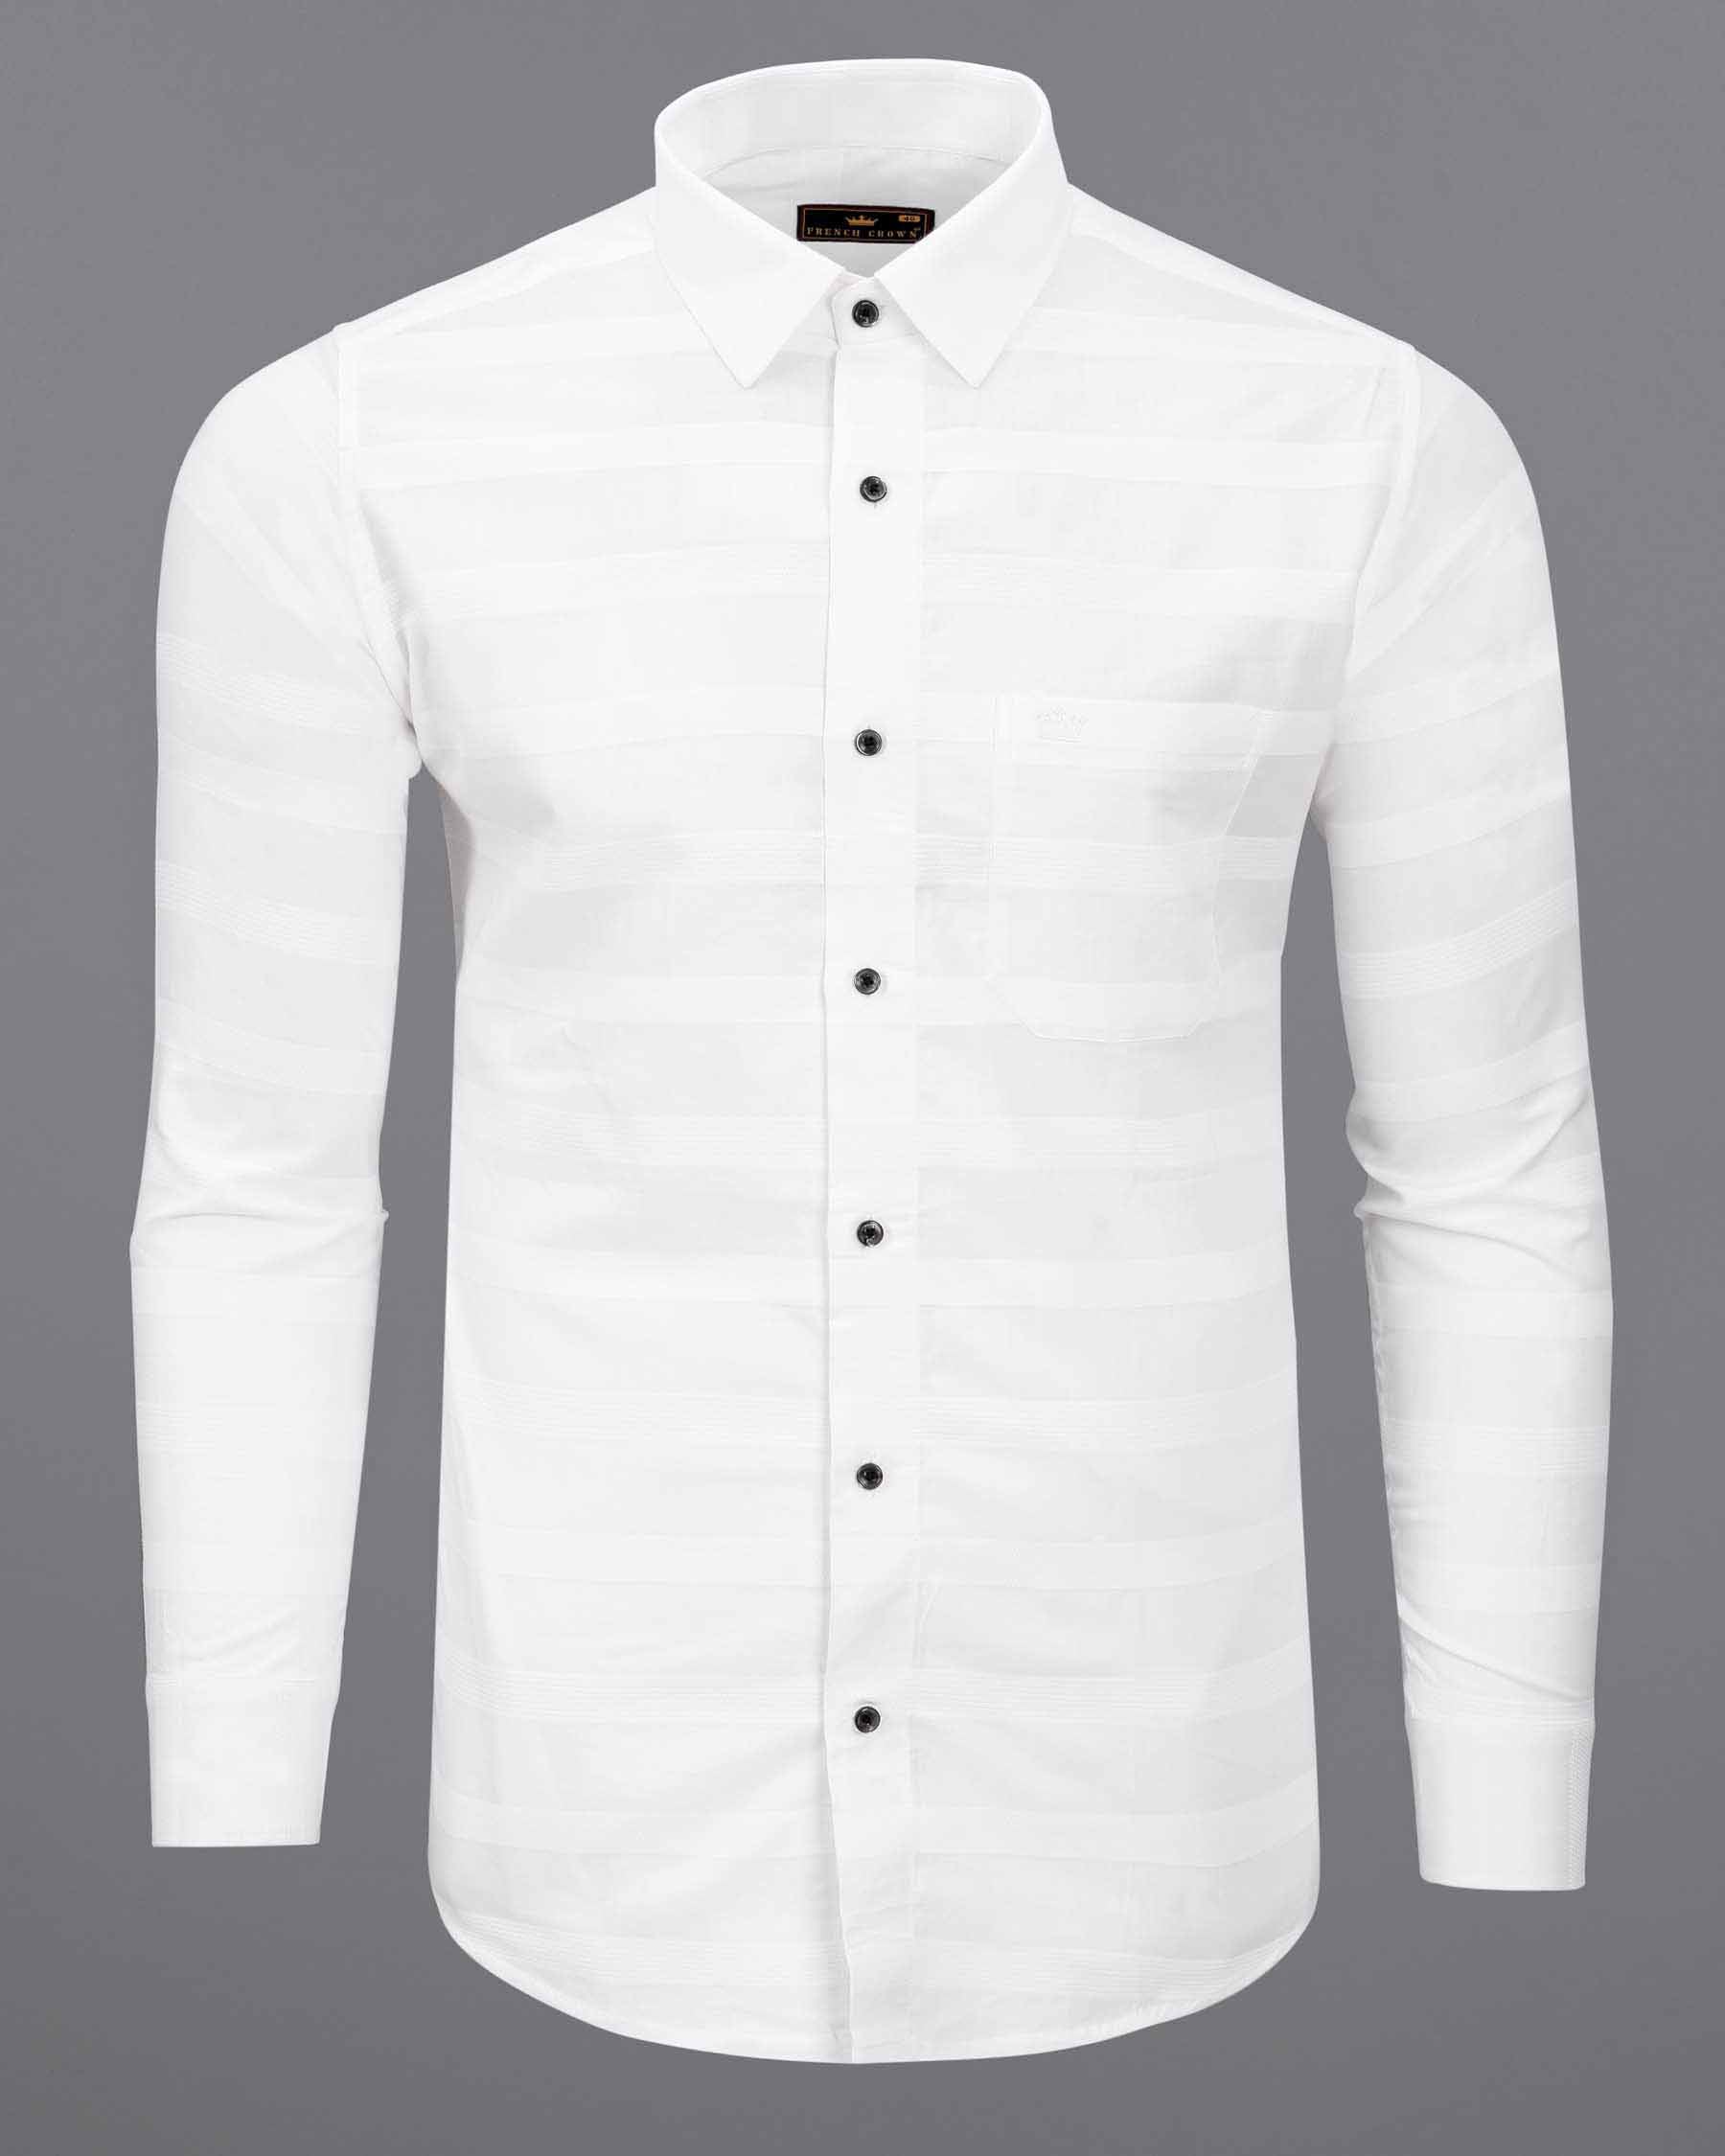 Bright White Dobby Textured Striped Premium Cotton Shirt 6146-BLK-38, 6146-BLK-H-38, 6146-BLK-39, 6146-BLK-H-39, 6146-BLK-40, 6146-BLK-H-40, 6146-BLK-42, 6146-BLK-H-42, 6146-BLK-44, 6146-BLK-H-44, 6146-BLK-46, 6146-BLK-H-46, 6146-BLK-48, 6146-BLK-H-48, 6146-BLK-50, 6146-BLK-H-50, 6146-BLK-52, 6146-BLK-H-52